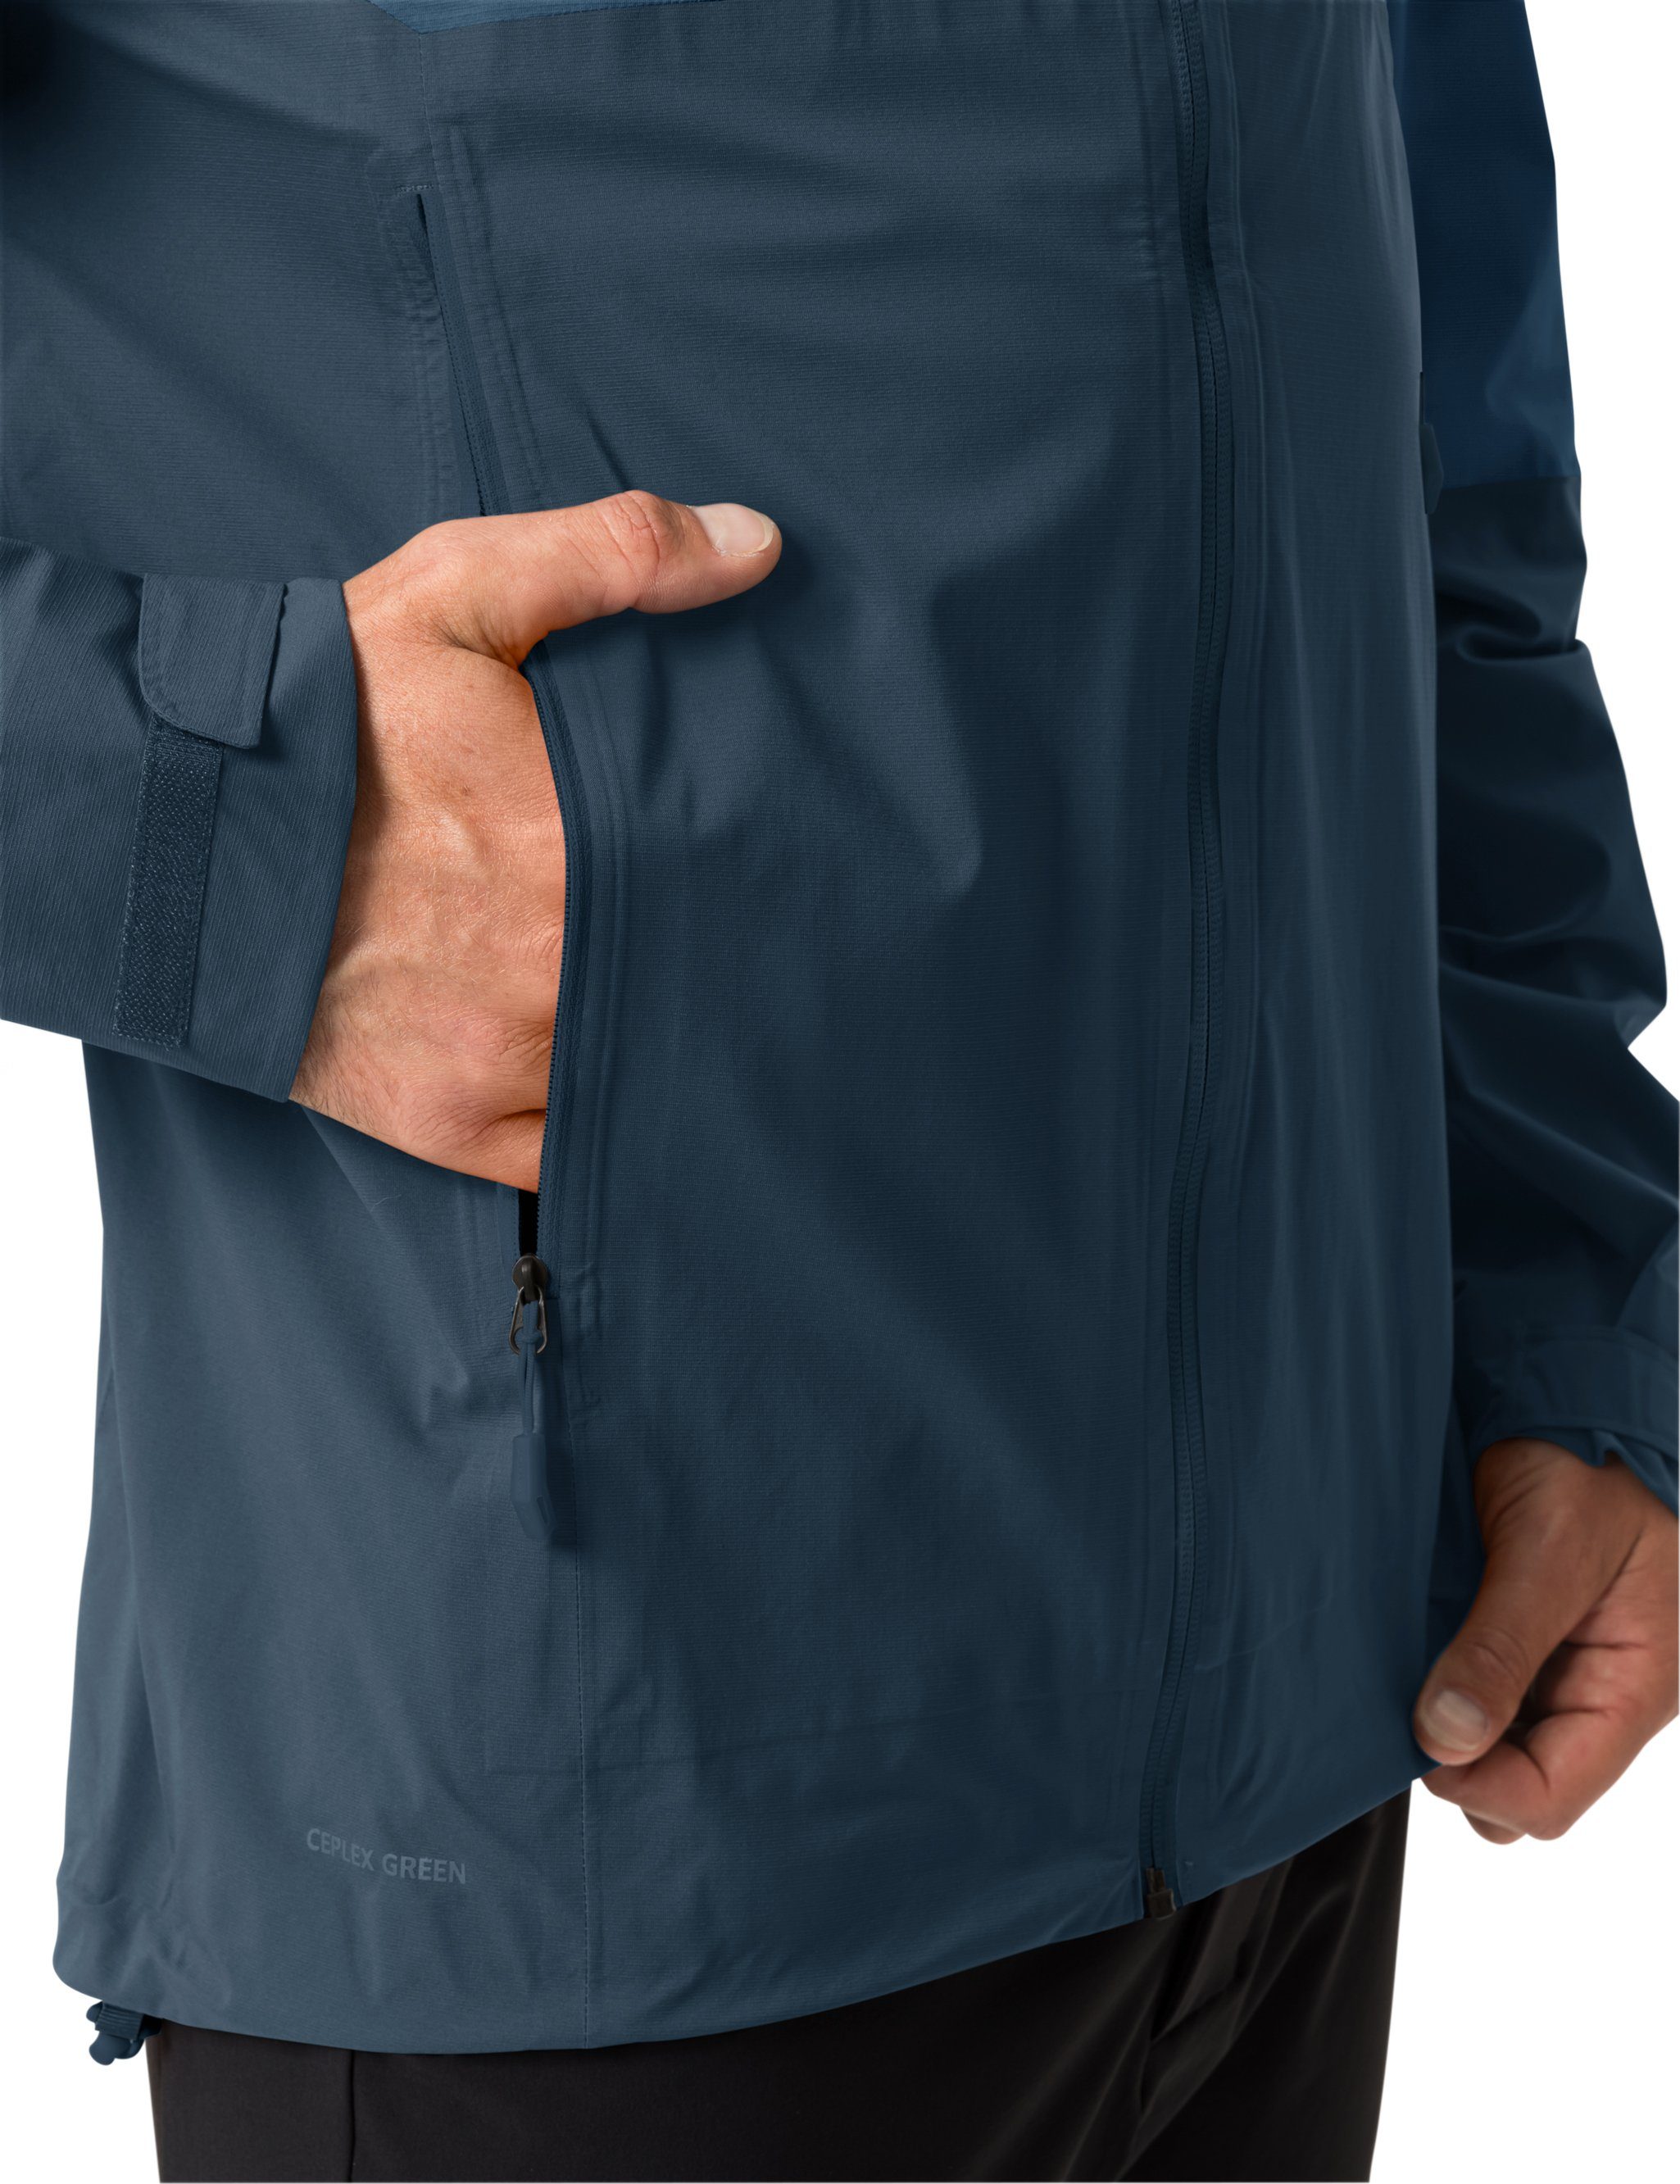 (1-St) VAUDE Klimaneutral dark Outdoorjacke Jacket Simony Men's kompensiert 2,5L sea/blue IV